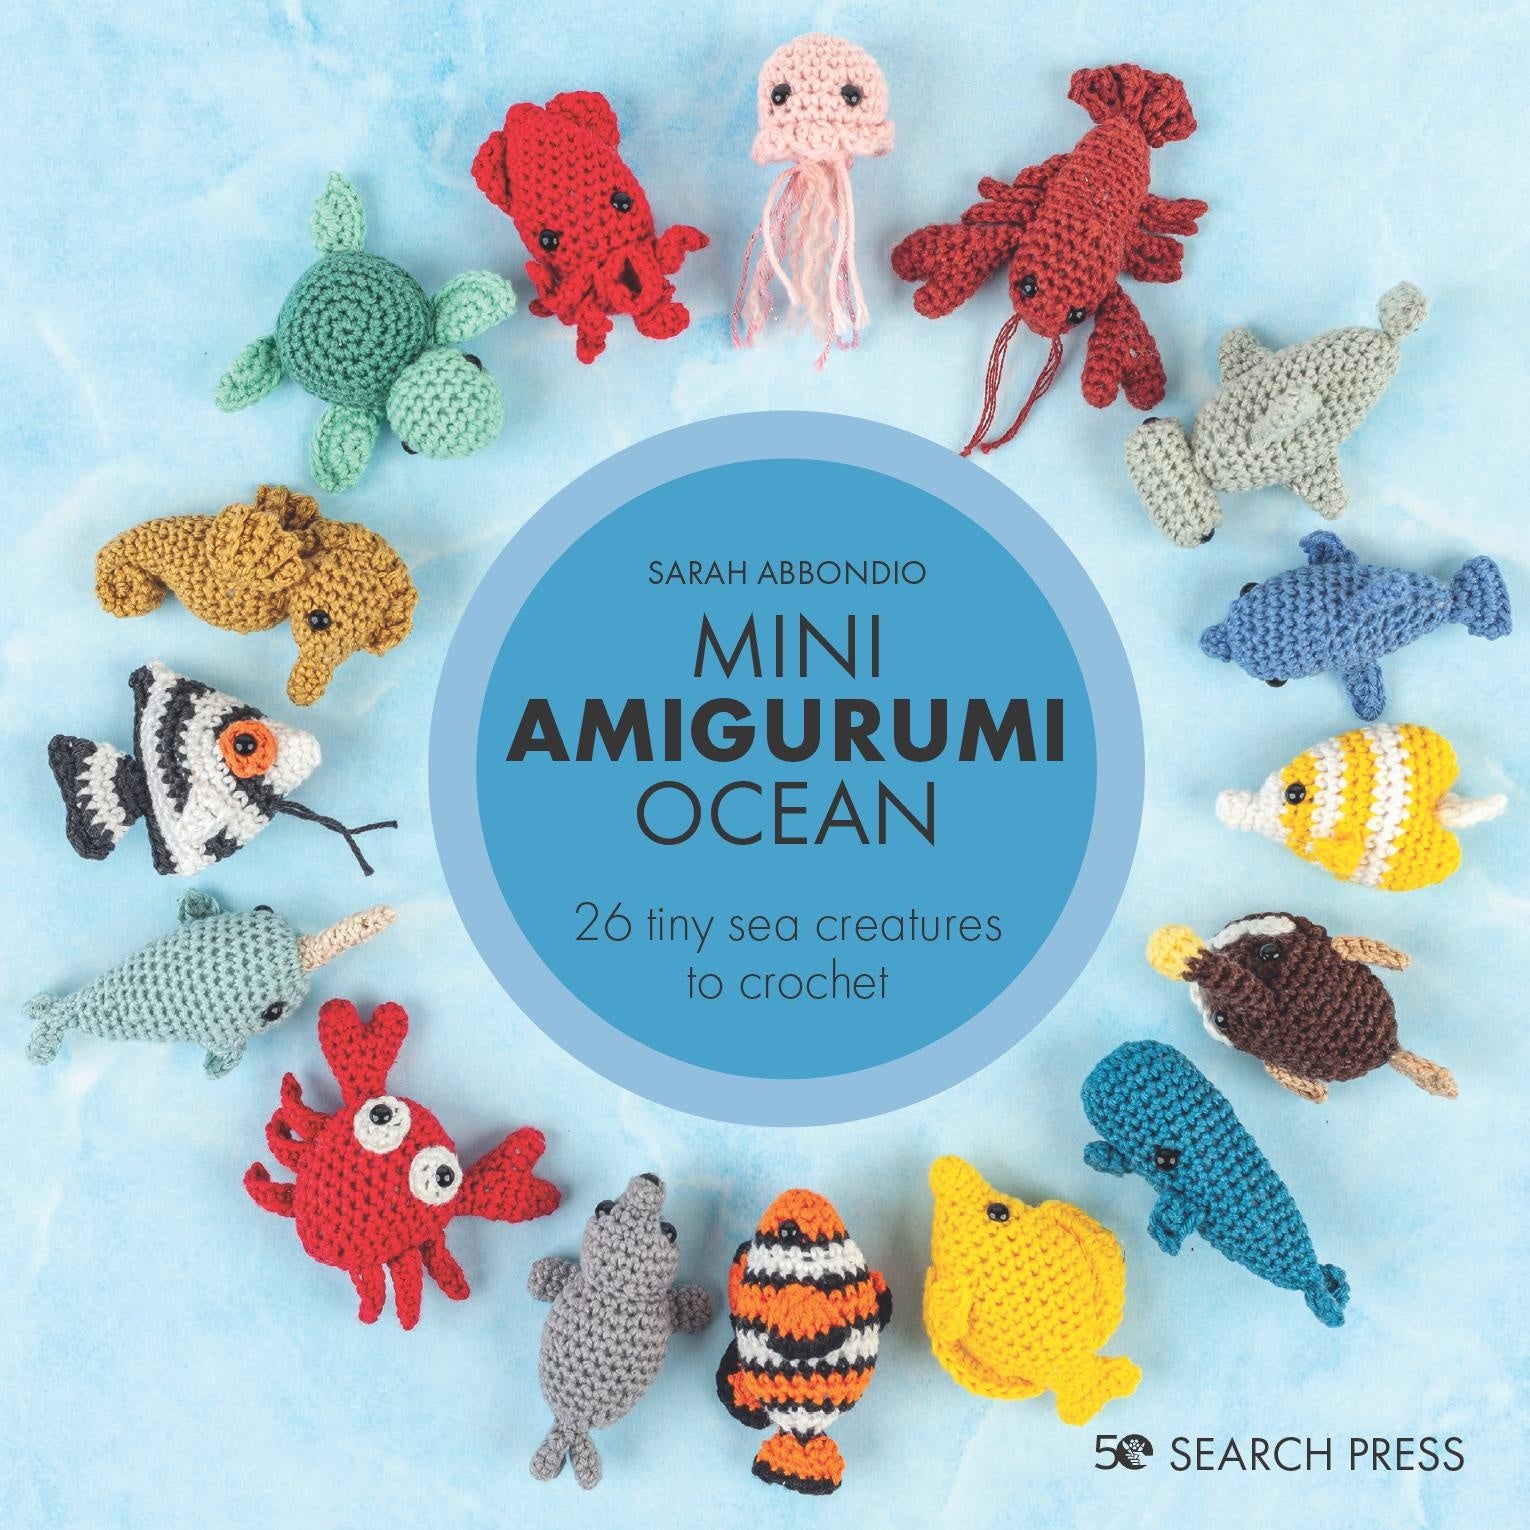 Mini Amigurumi Ocean - 26 tiny sea creatures to crochet